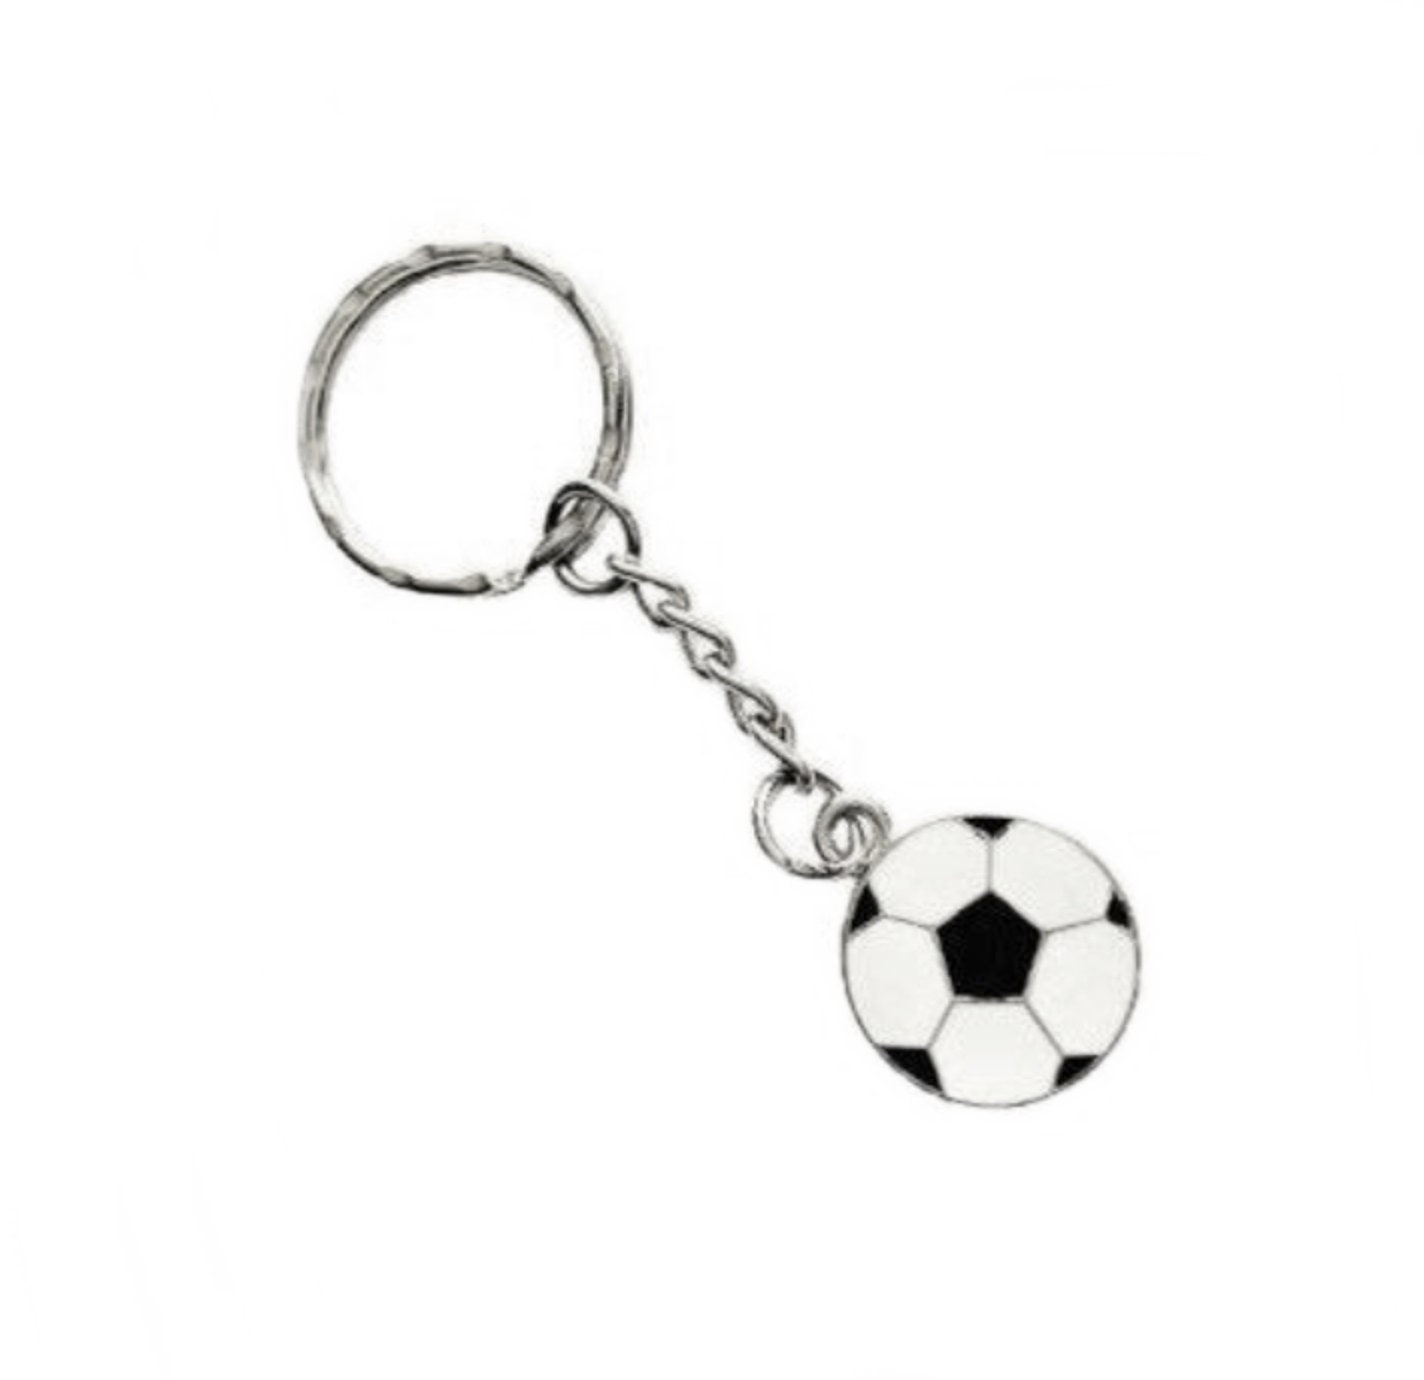 Alba Football Keyring Keychain Bag Charm Gift in Black 